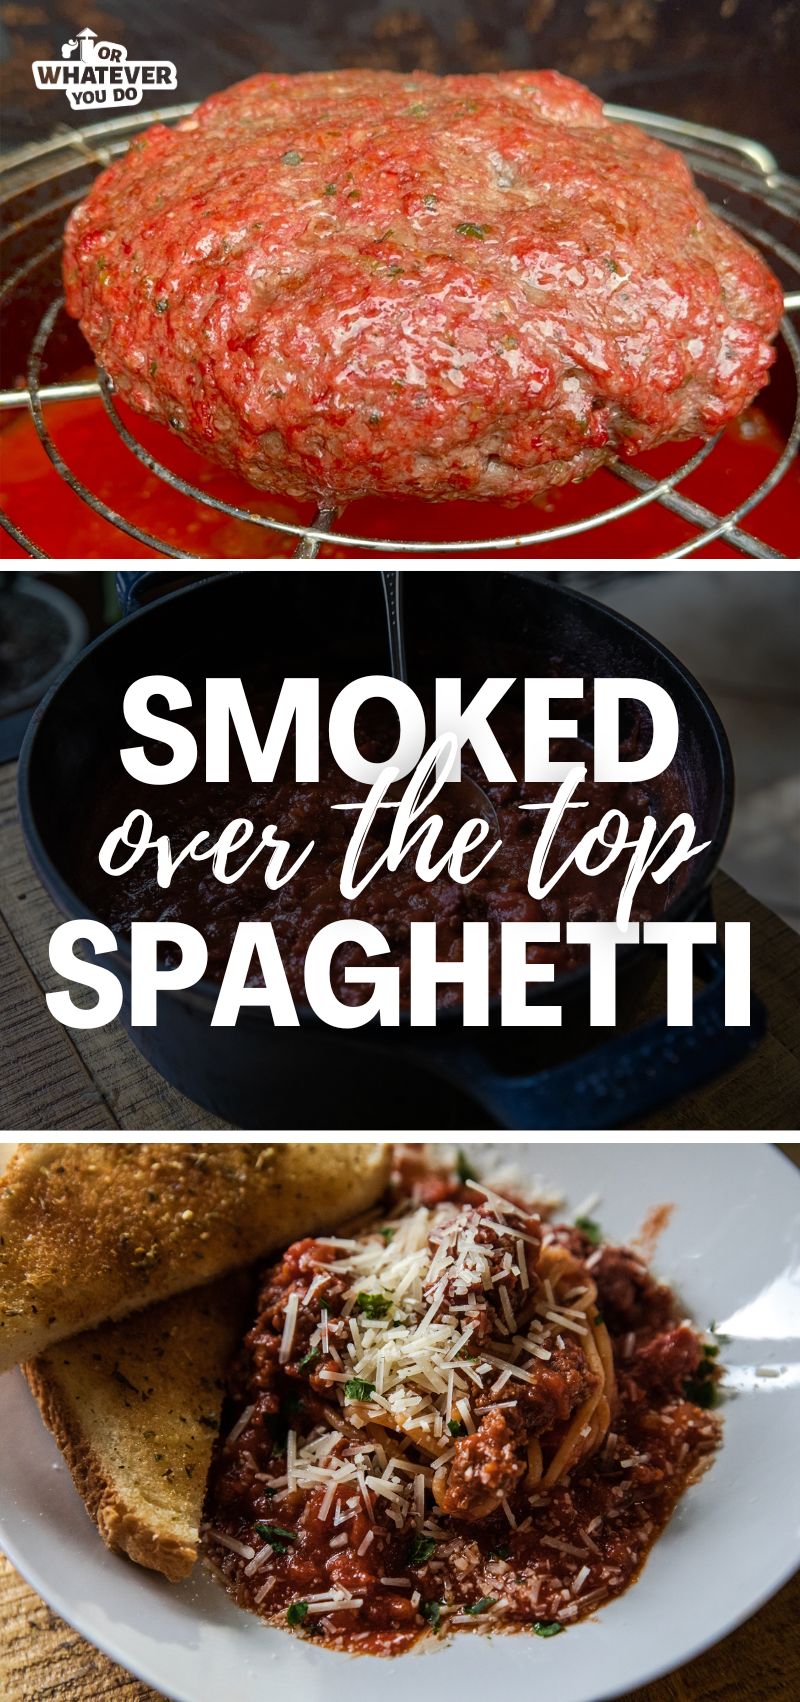 Over The Top Spaghetti